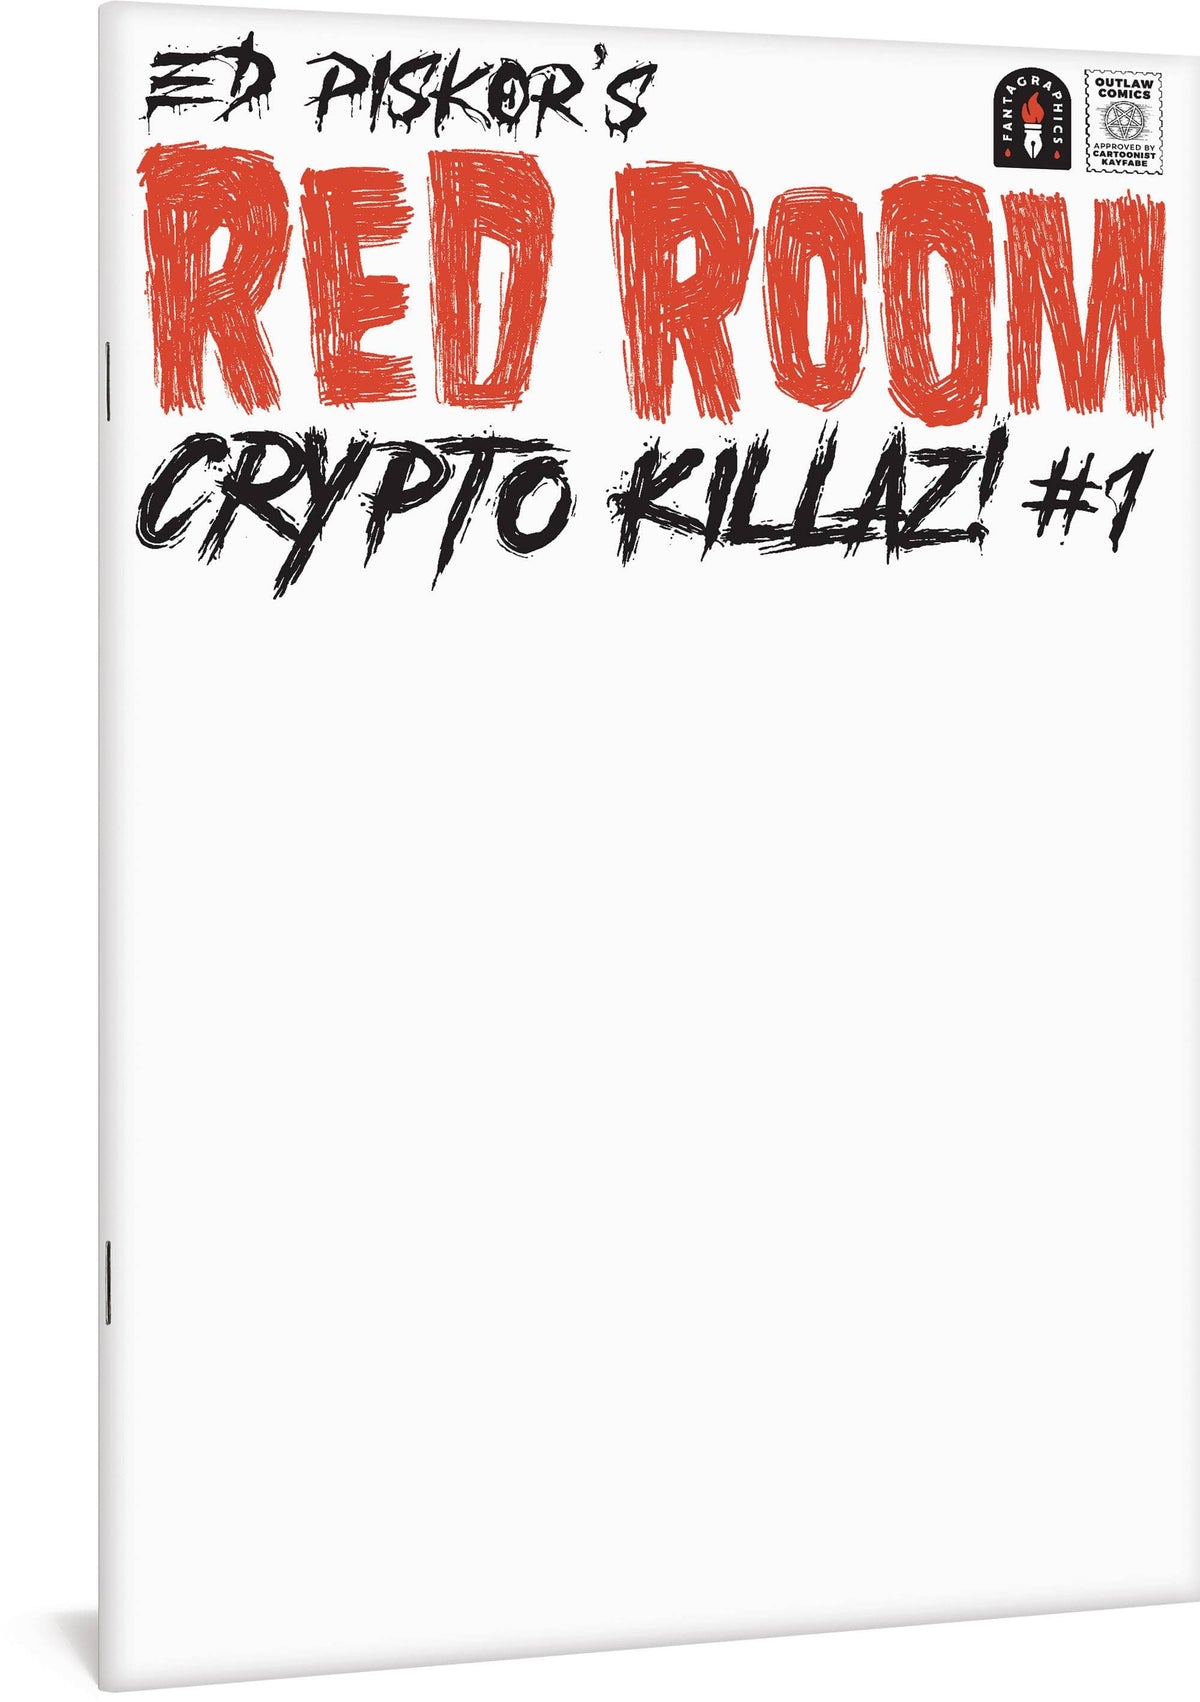 RED ROOM CRYPTO KILLAZ #1 CVR E SKETCH VAR (MR)